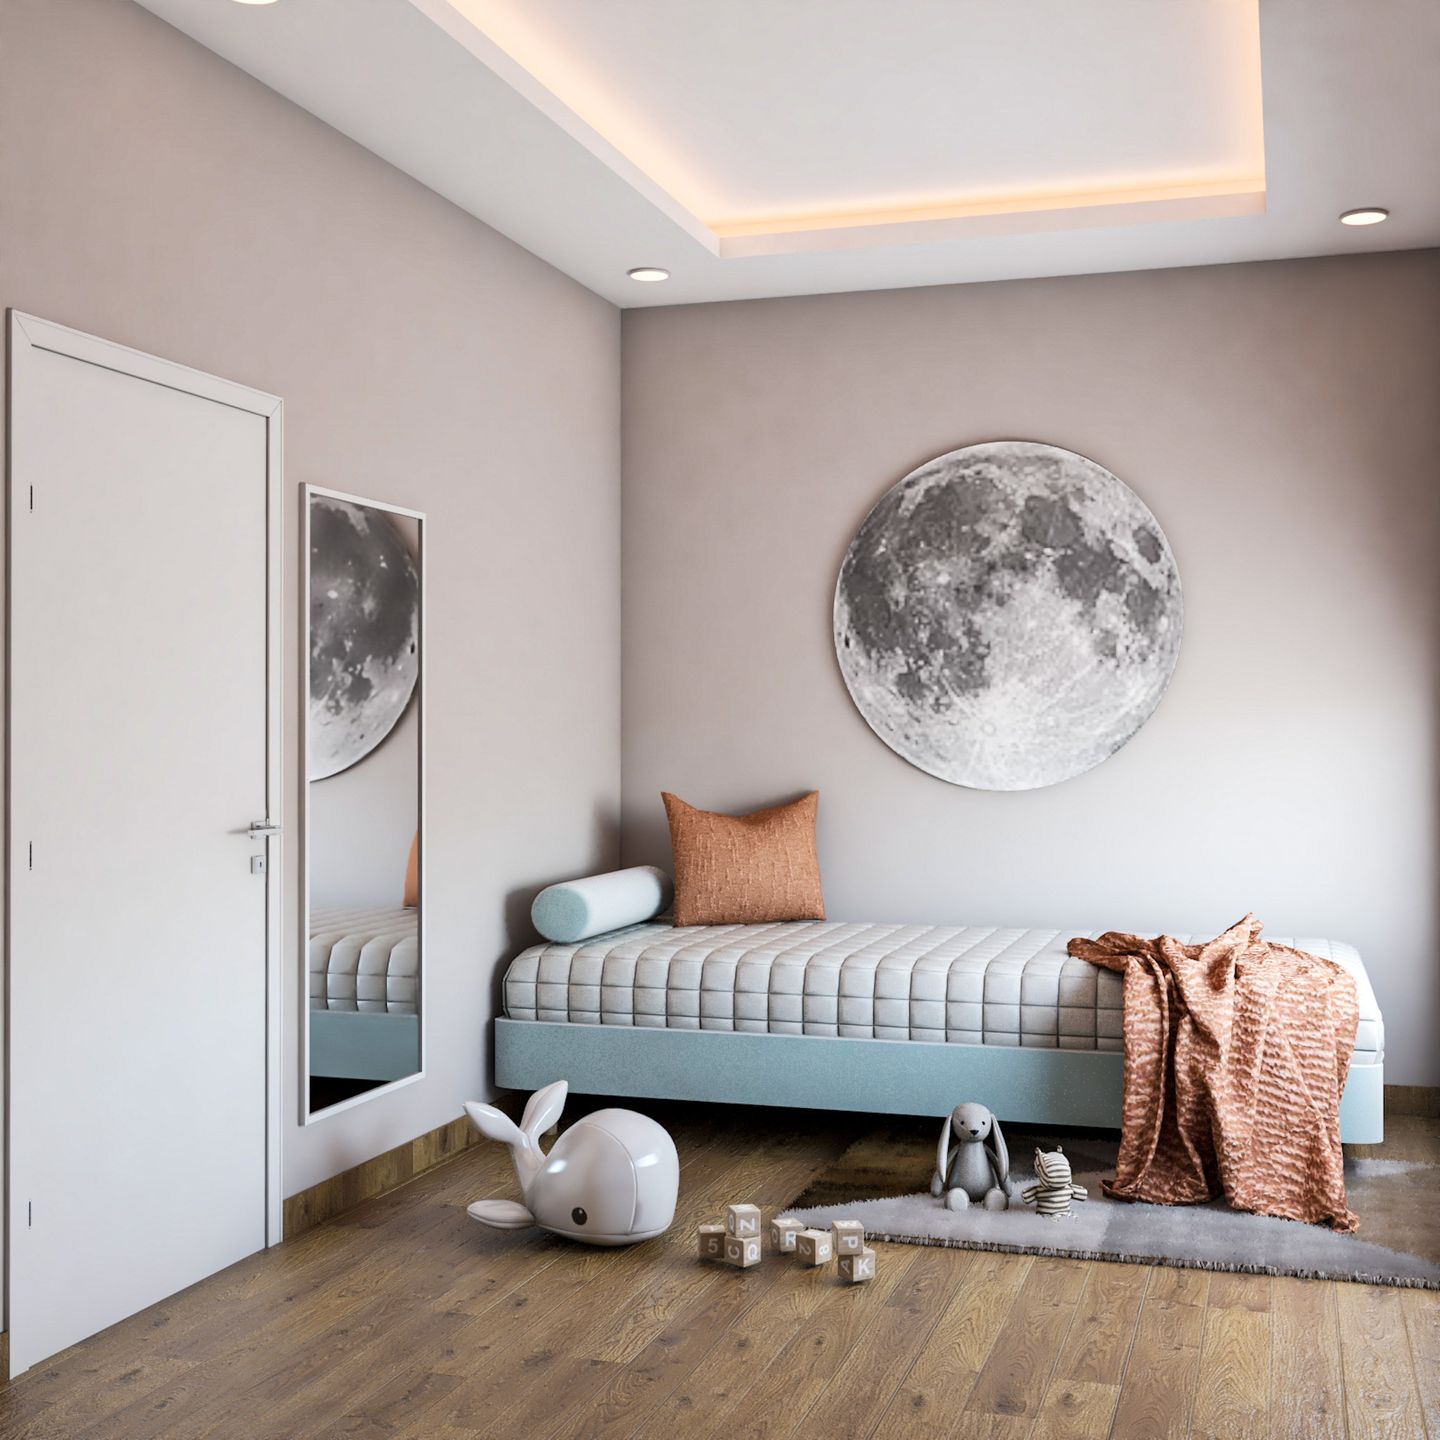 Minimalist Bedroom Design With Wall Decor - Livspace